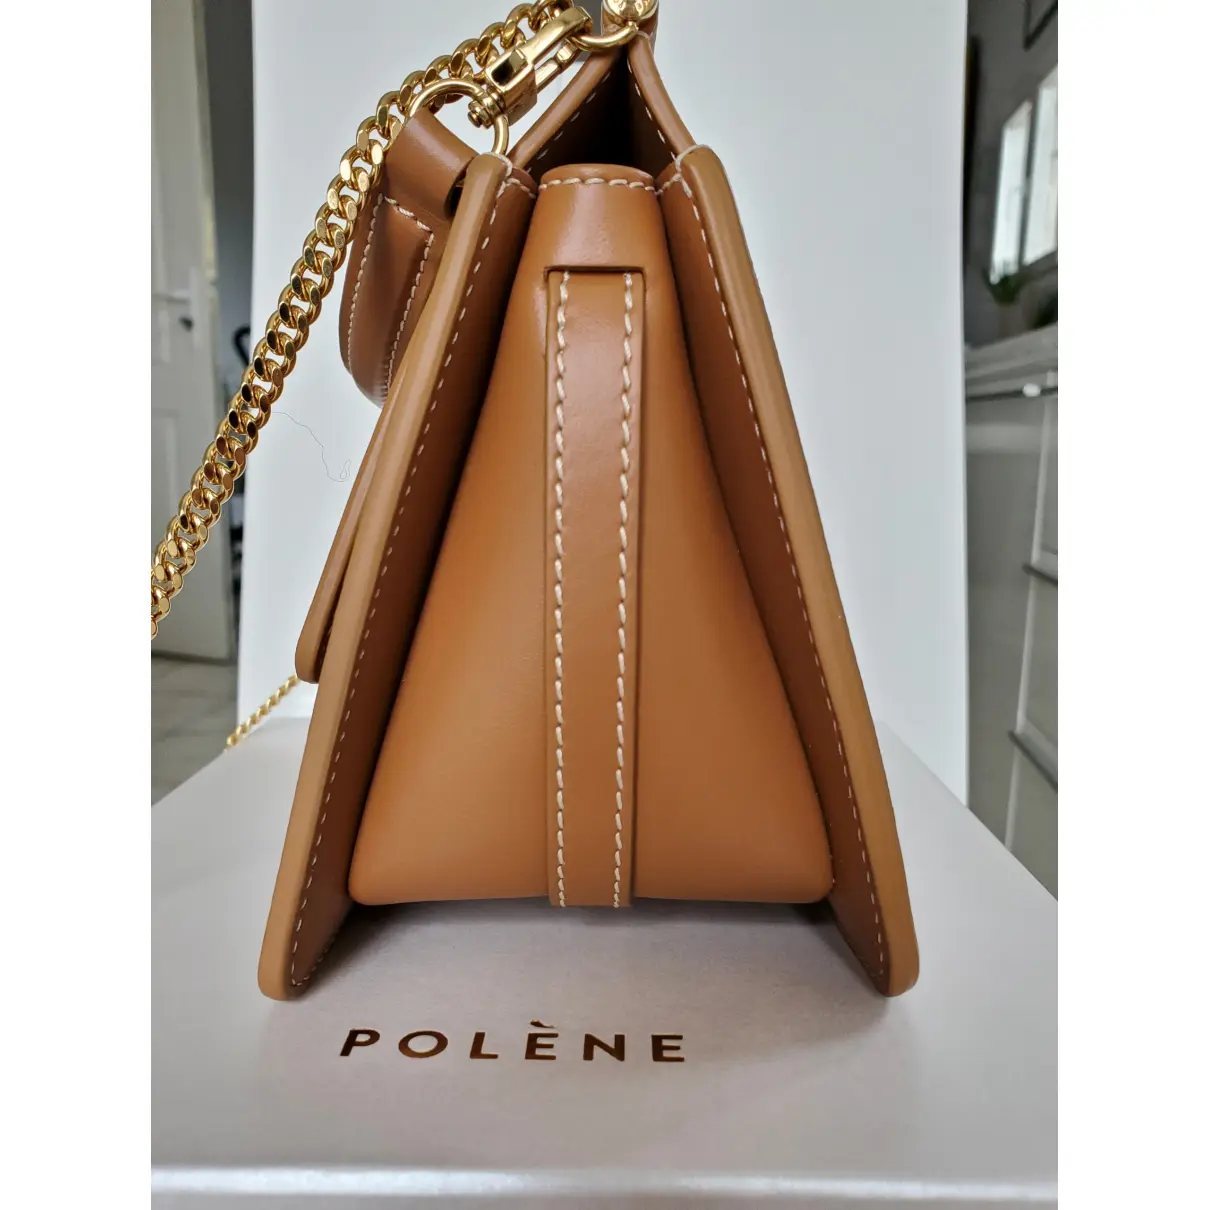 Buy Polene Numéro sept mini leather crossbody bag online